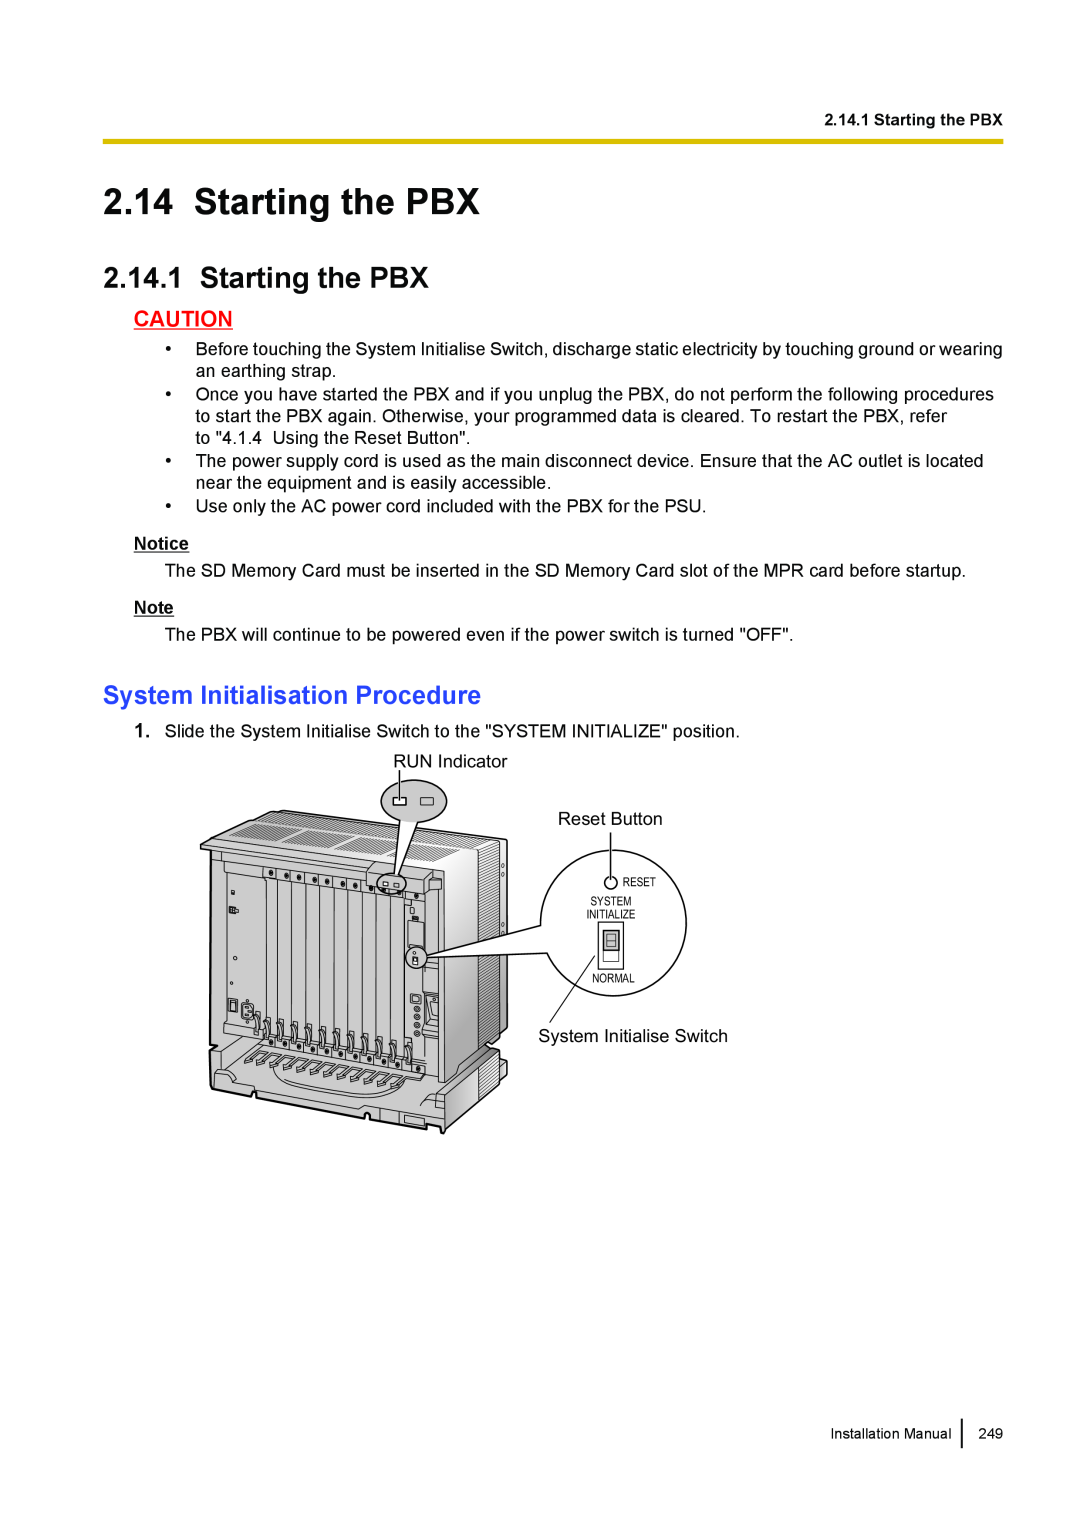 Panasonic KX-TDA100 installation manual Starting the PBX, System Initialisation Procedure 